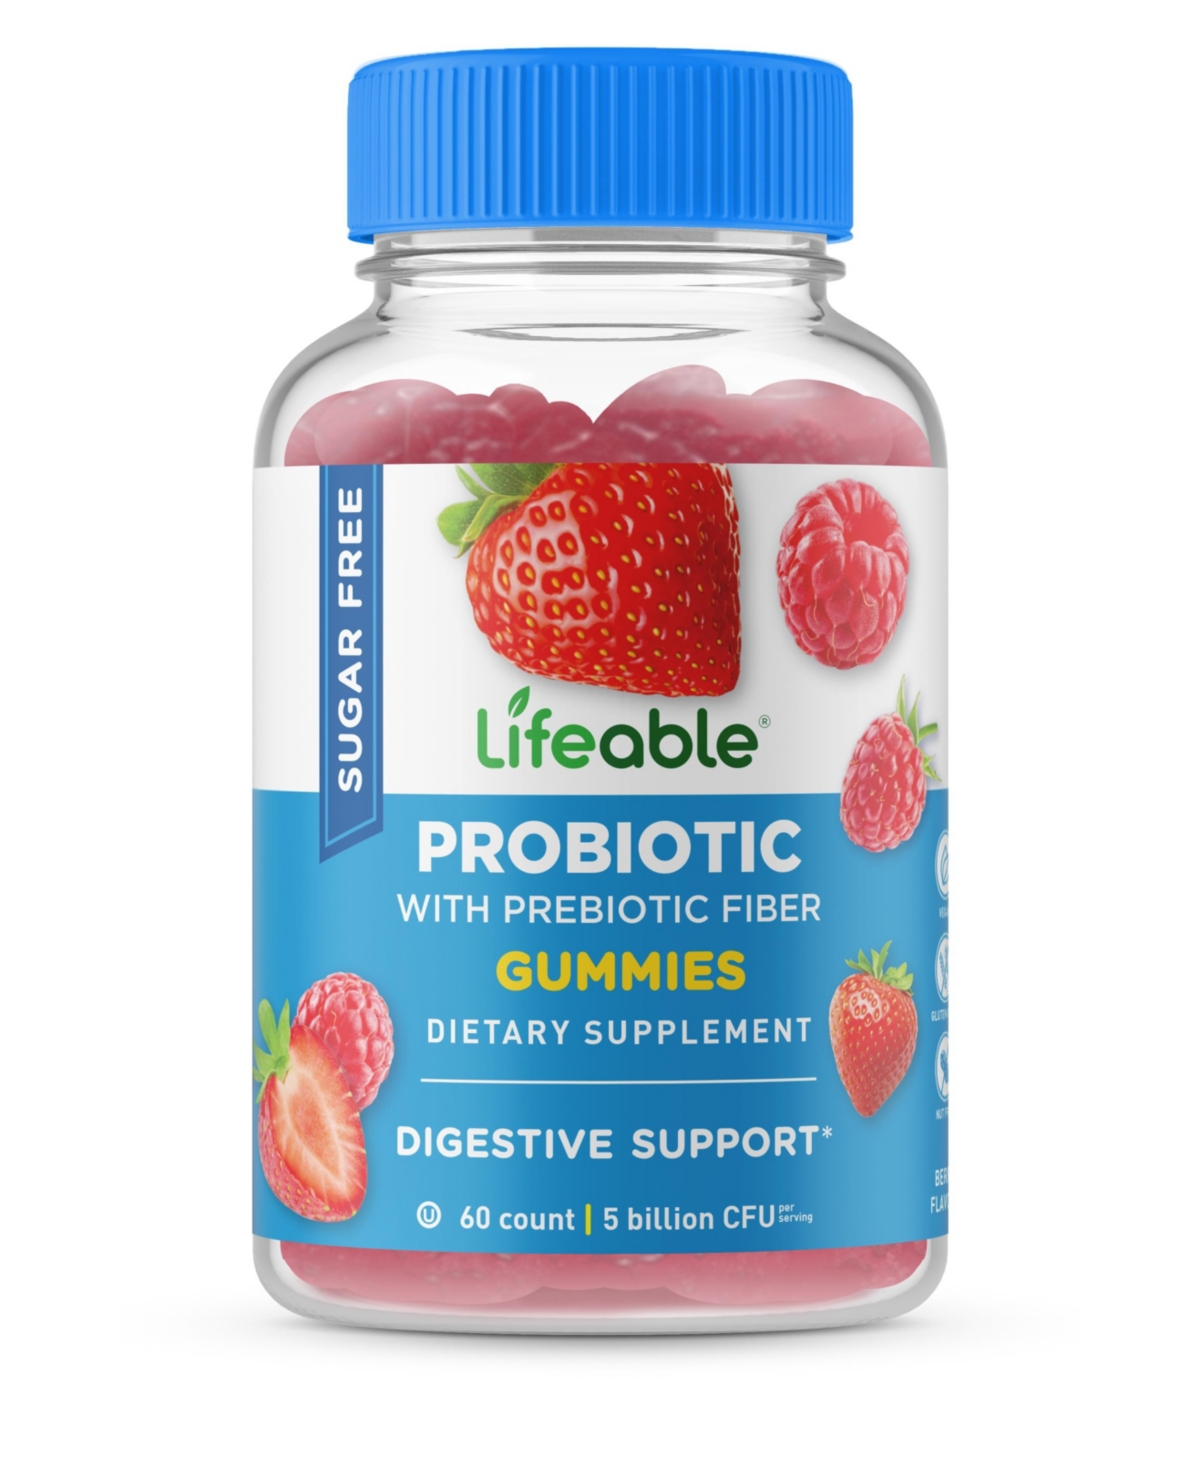 Sugar Free Probiotics with Prebiotics Fiber Gummies - Healthy Digestive And Immune Functions - Dietary Supplement Vitamins - 60 Gummies - Ope